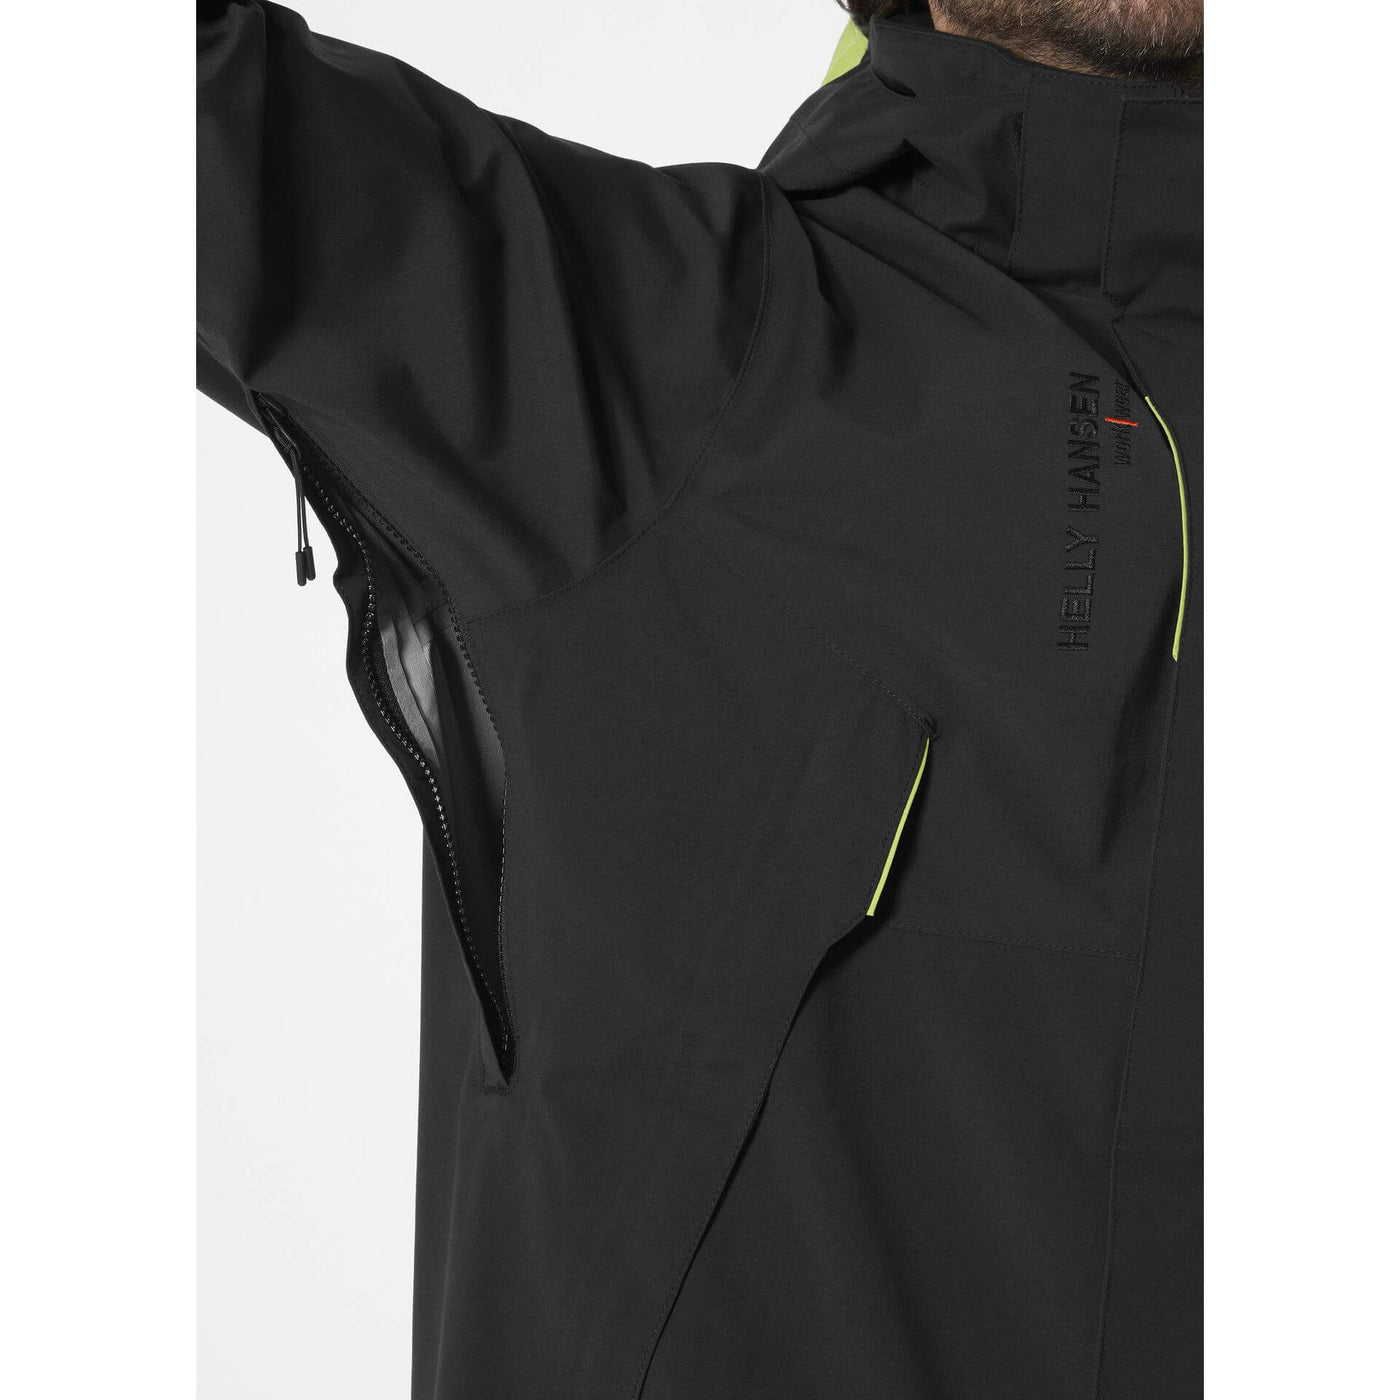 Helly Hansen Magni Evolution Waterproof Shell Jacket Black Feature 2#colour_black